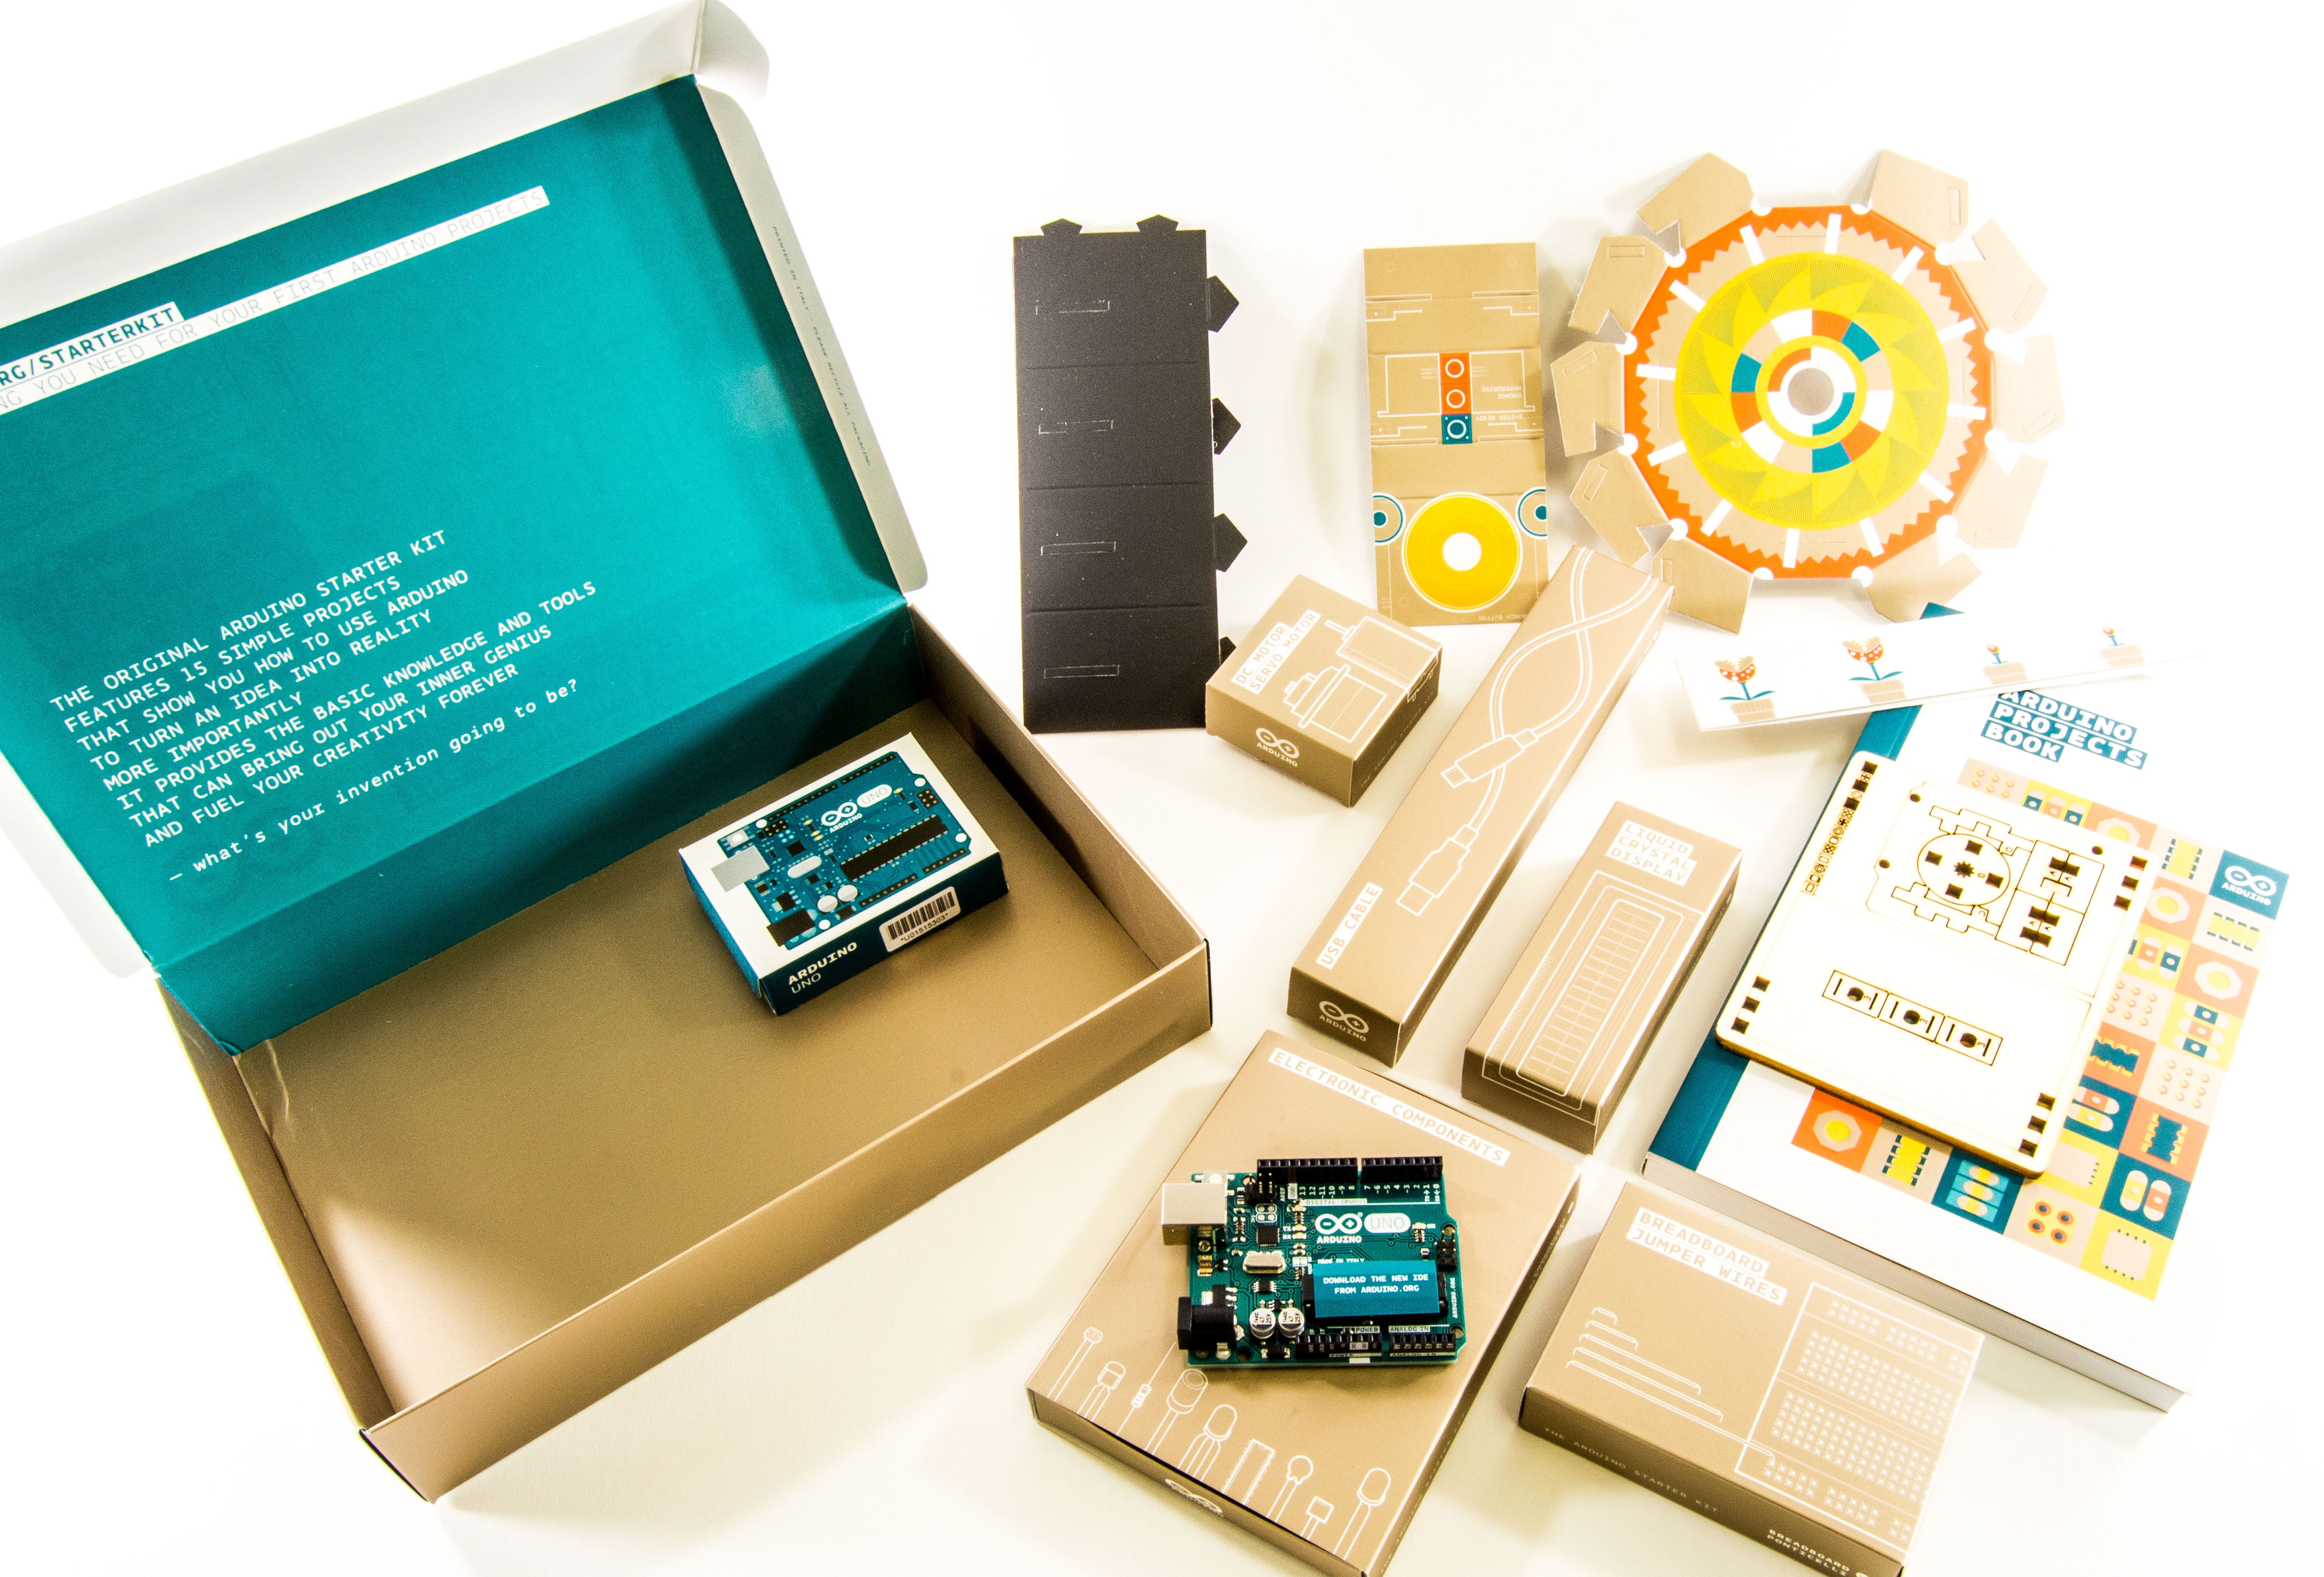 K010007 - Arduino - Starter Kit, Arduino UNO, Projects Book